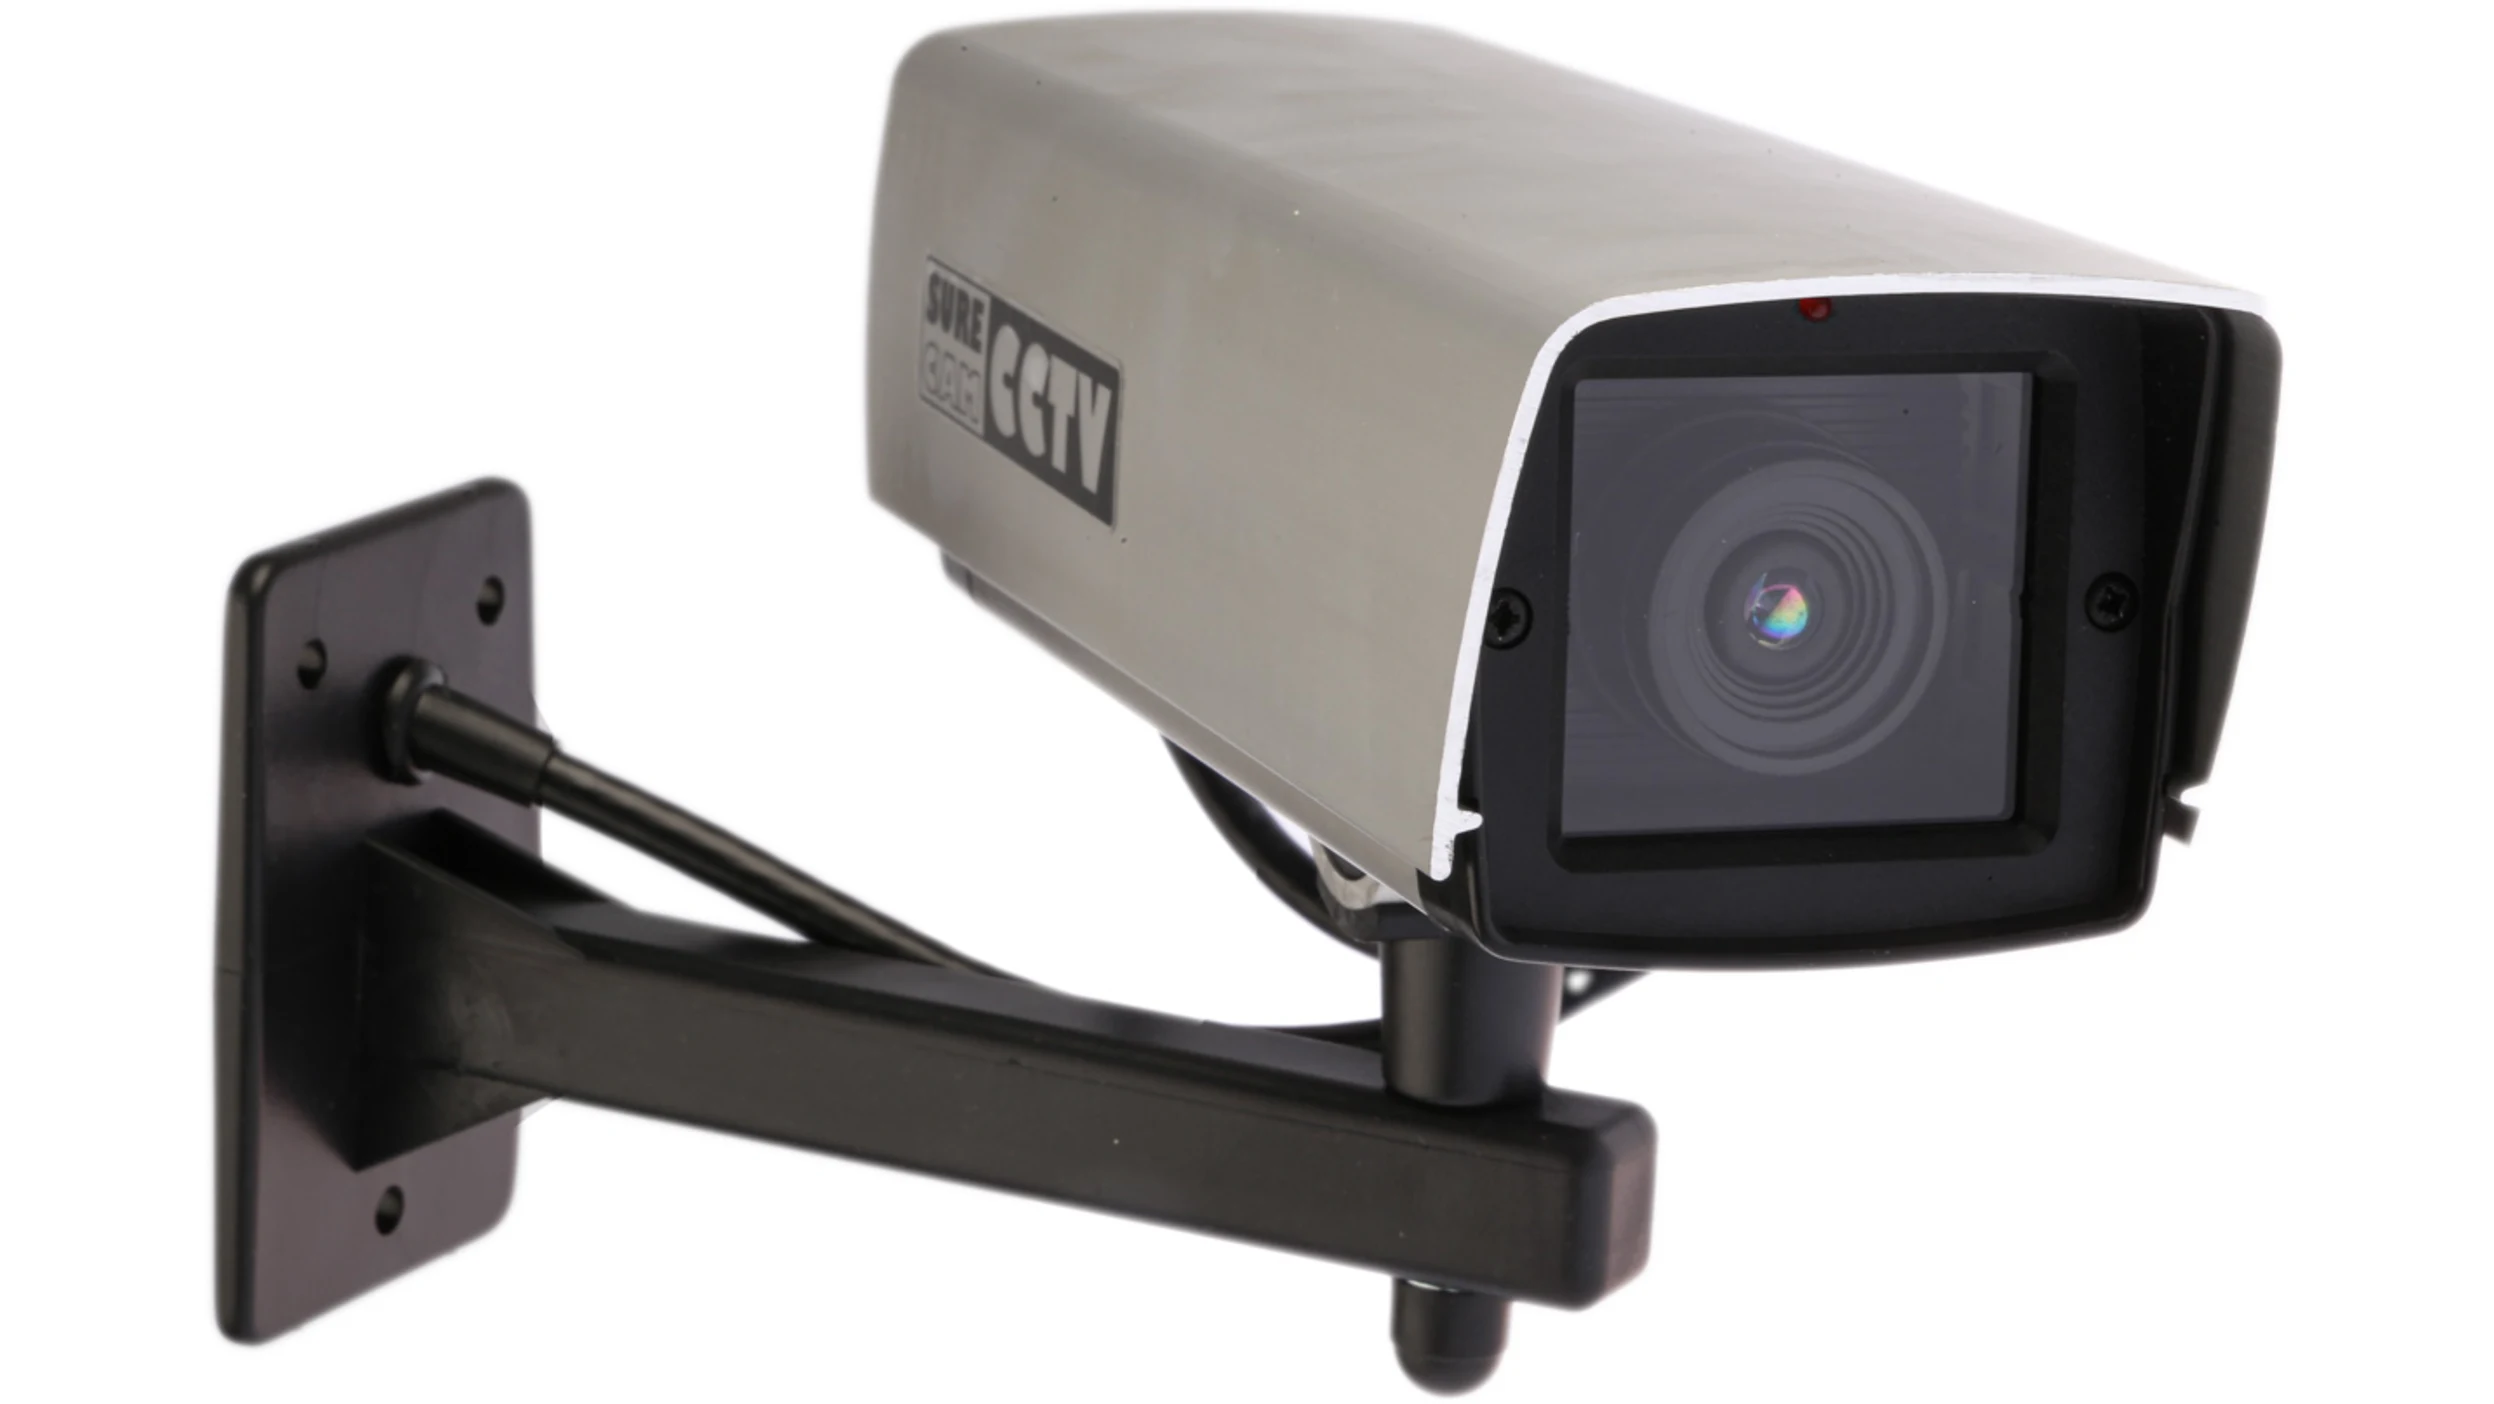 Are Dummy CCTV Cameras Any Good